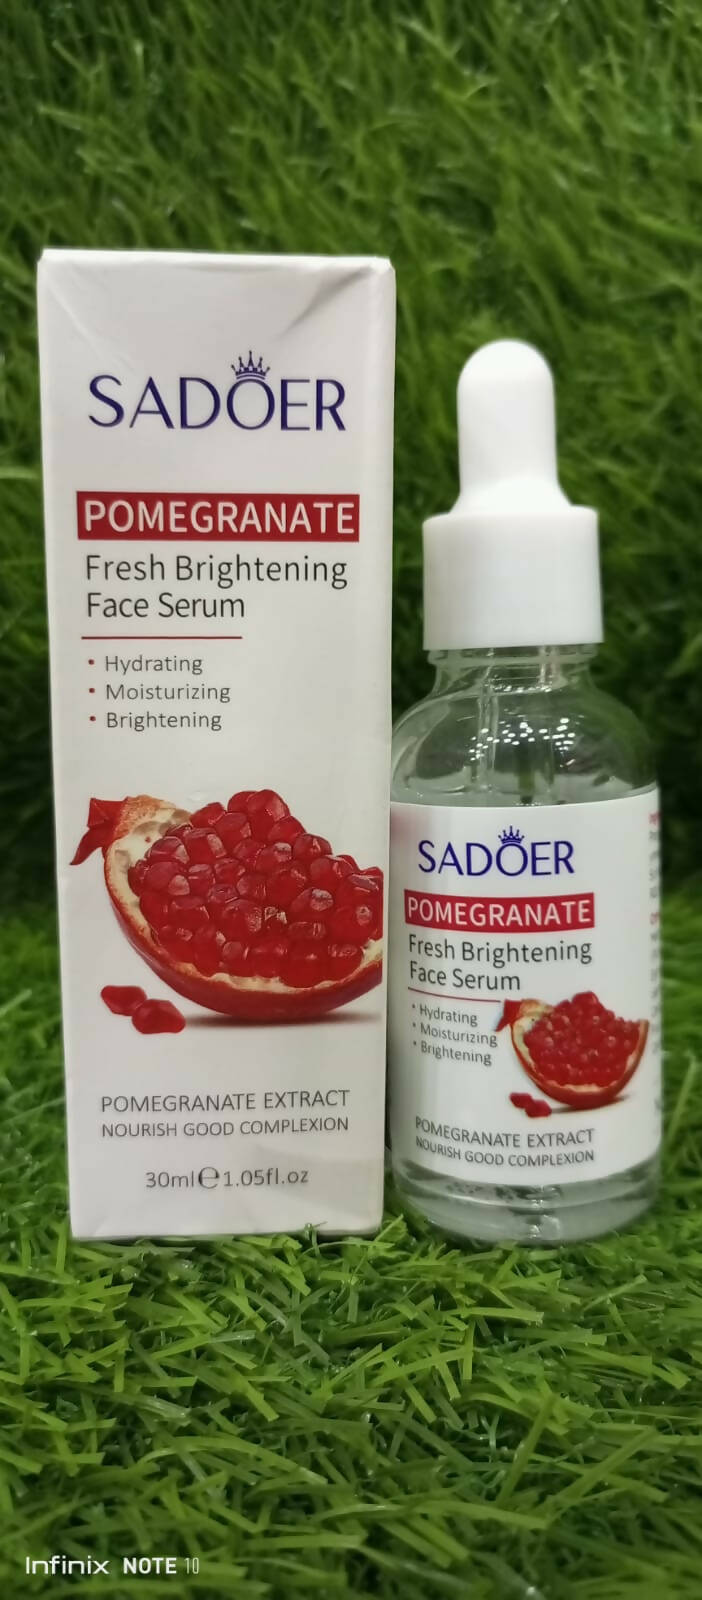 Sadoer Pomegranate Fresh Brightening Face Serum